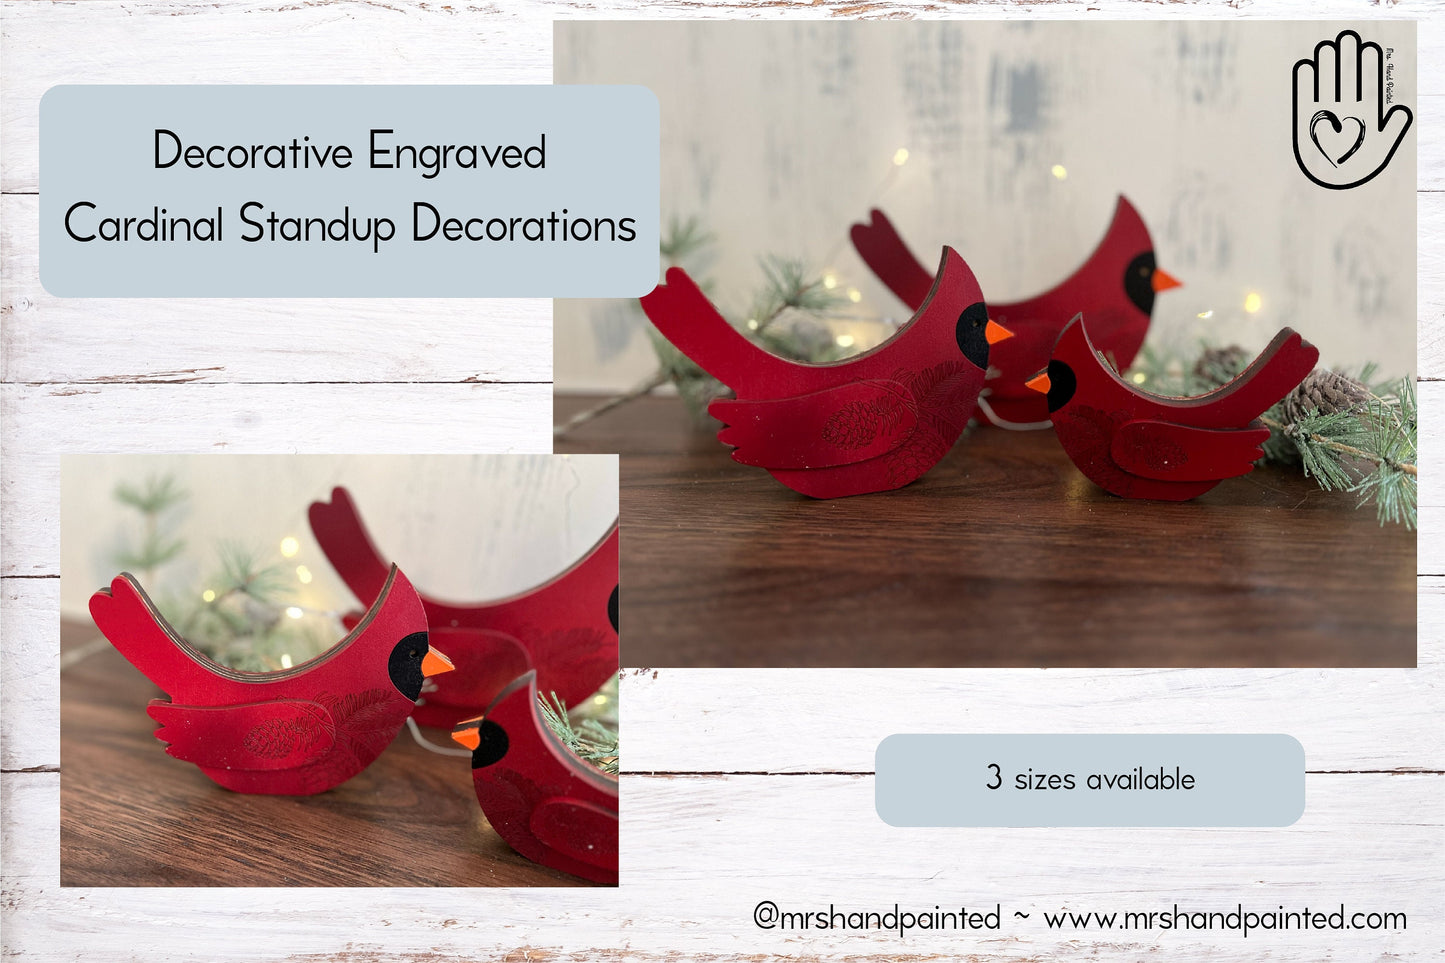 Decorative Engraved Standup Cardinal Decorations - Laser Cut Wood Décor